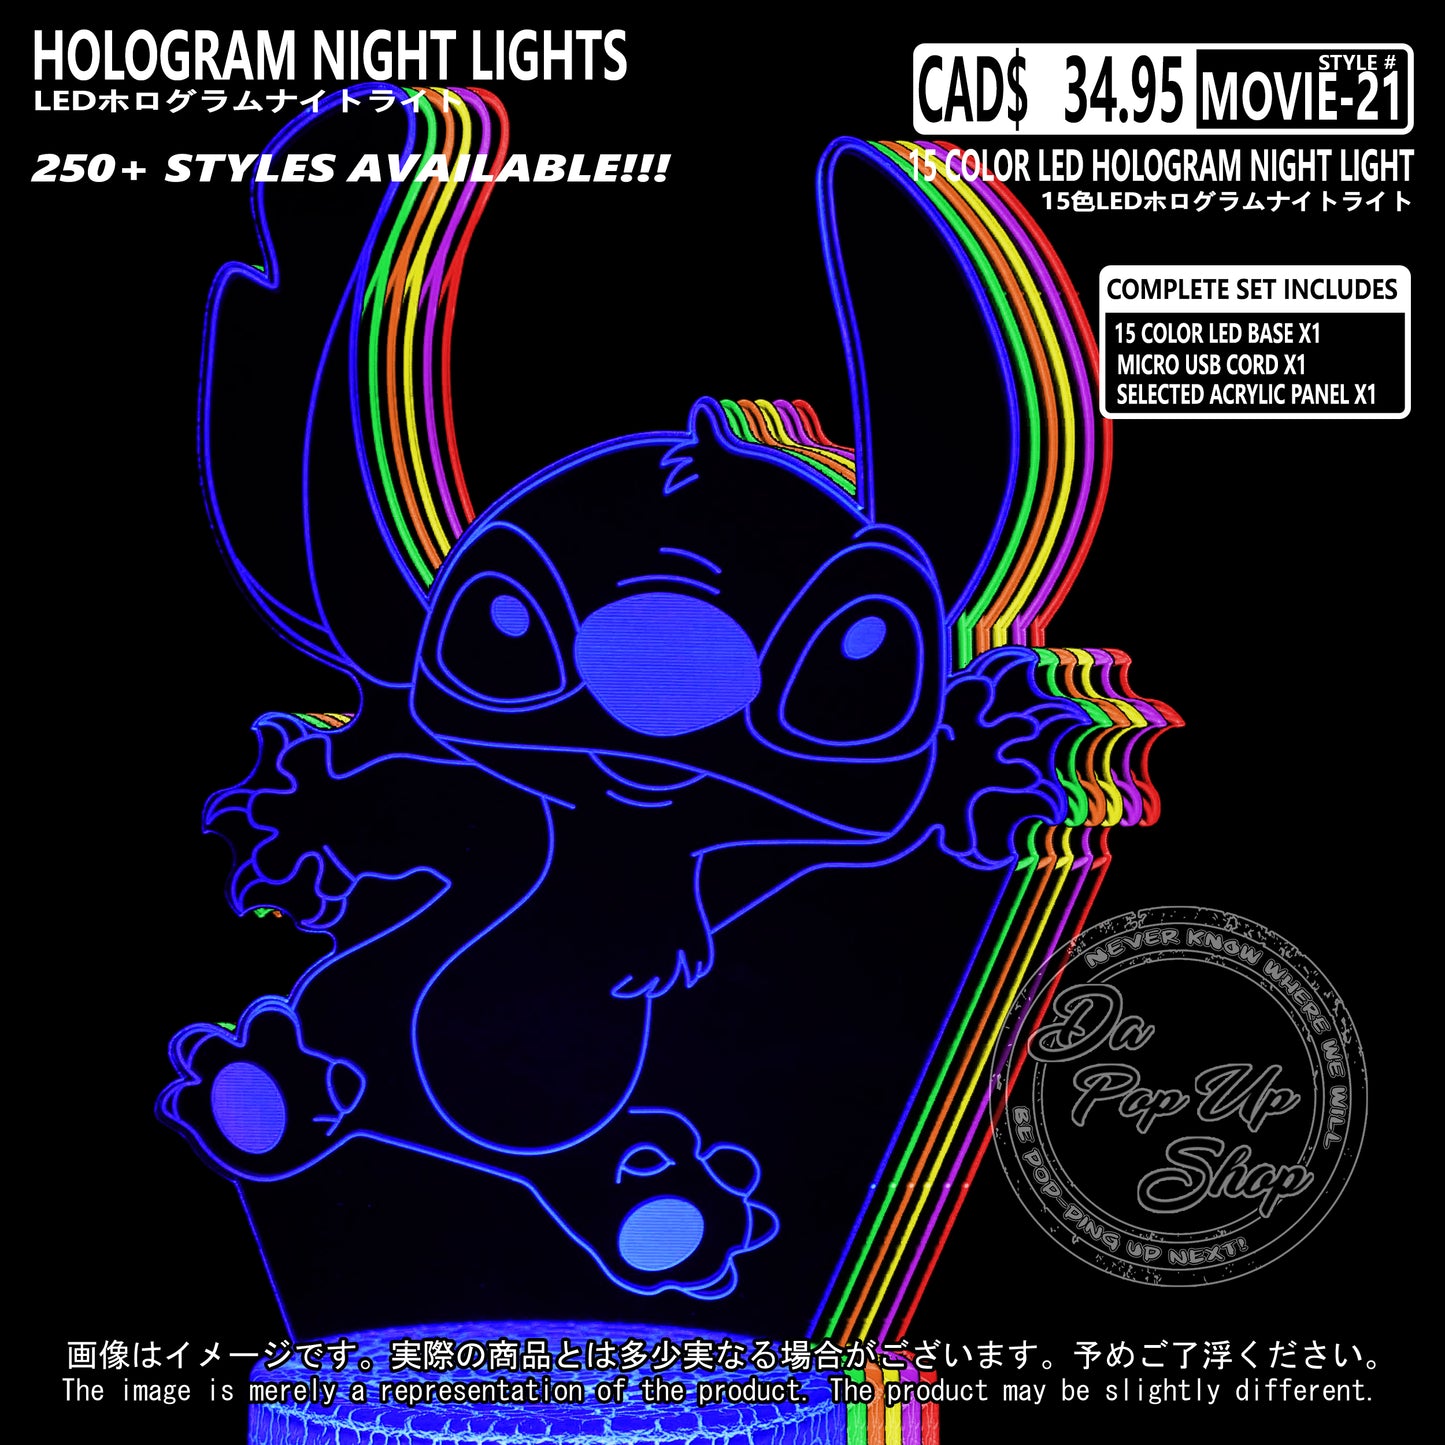 (MOVIE-21) Lilo & Stitch Hologram LED Night Light